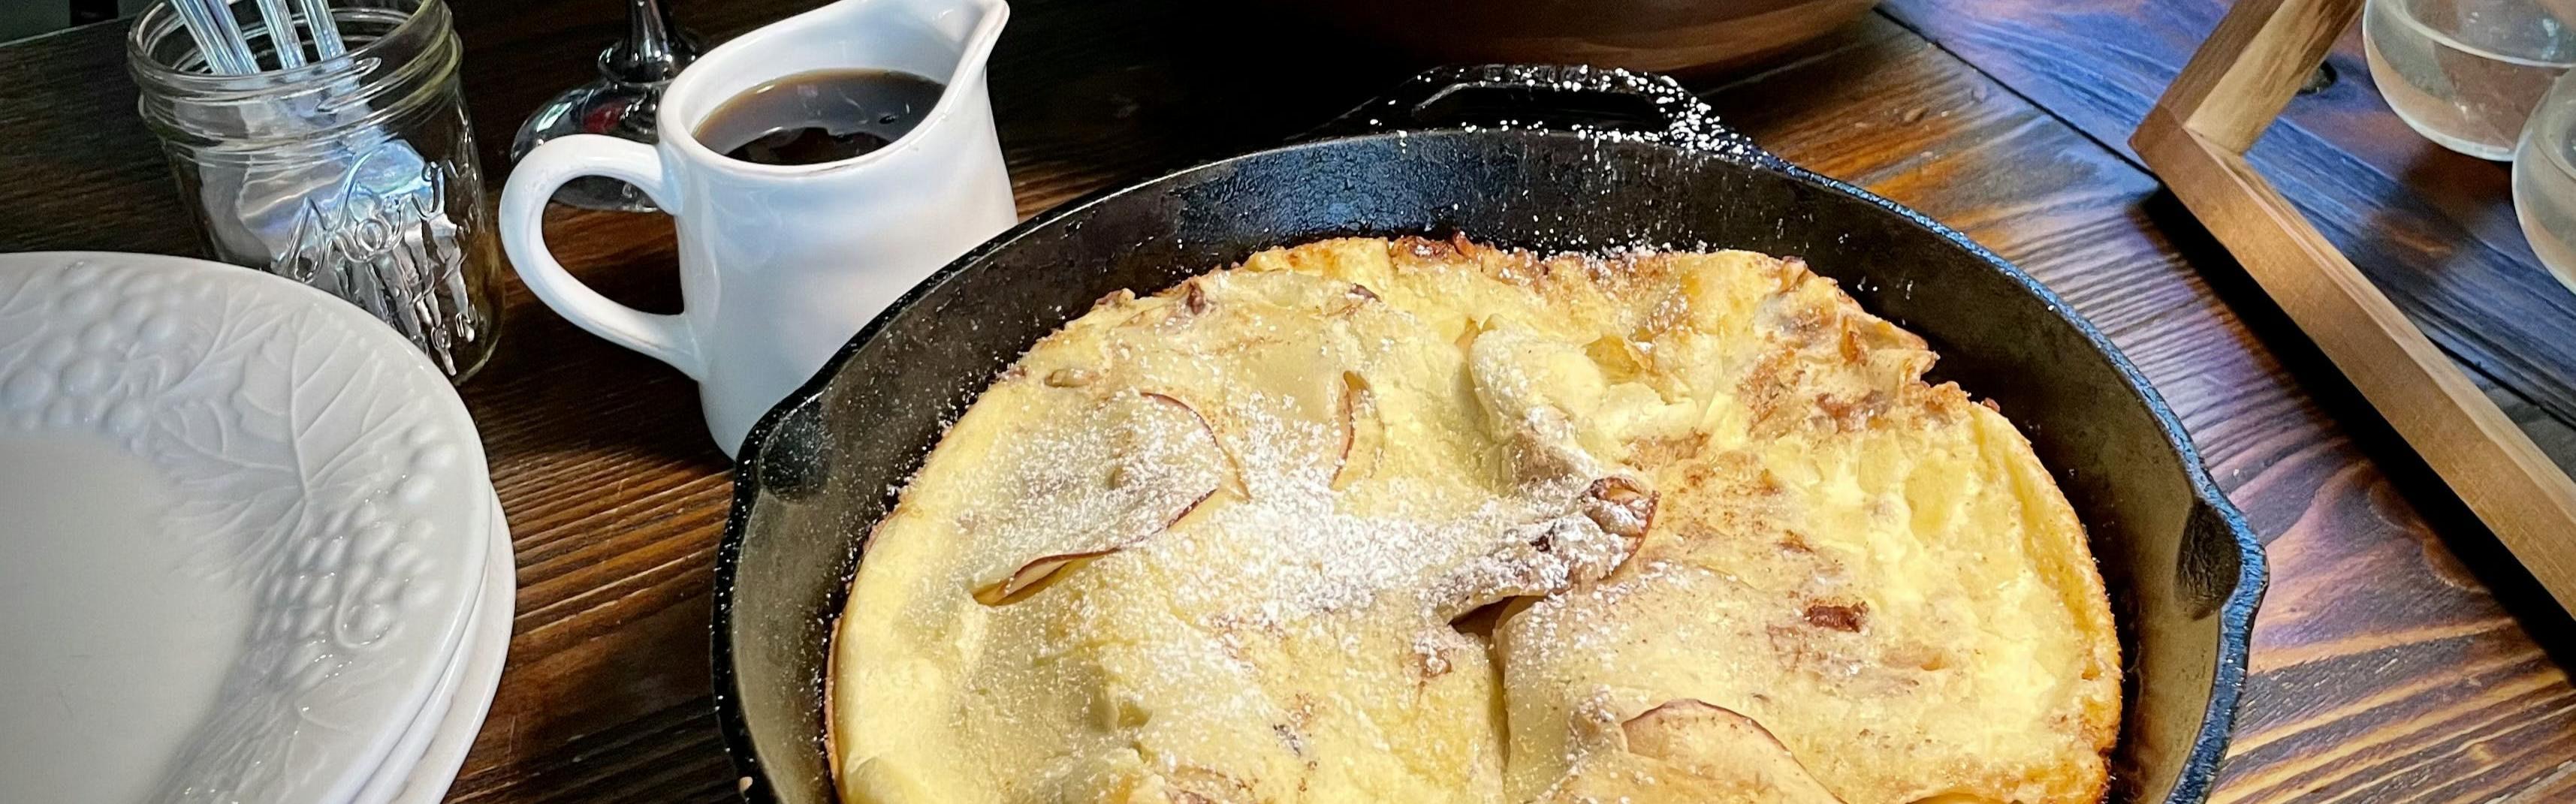 Cast Iron German Pancake: Skillet or Dutch Oven - Mountain Kitchen